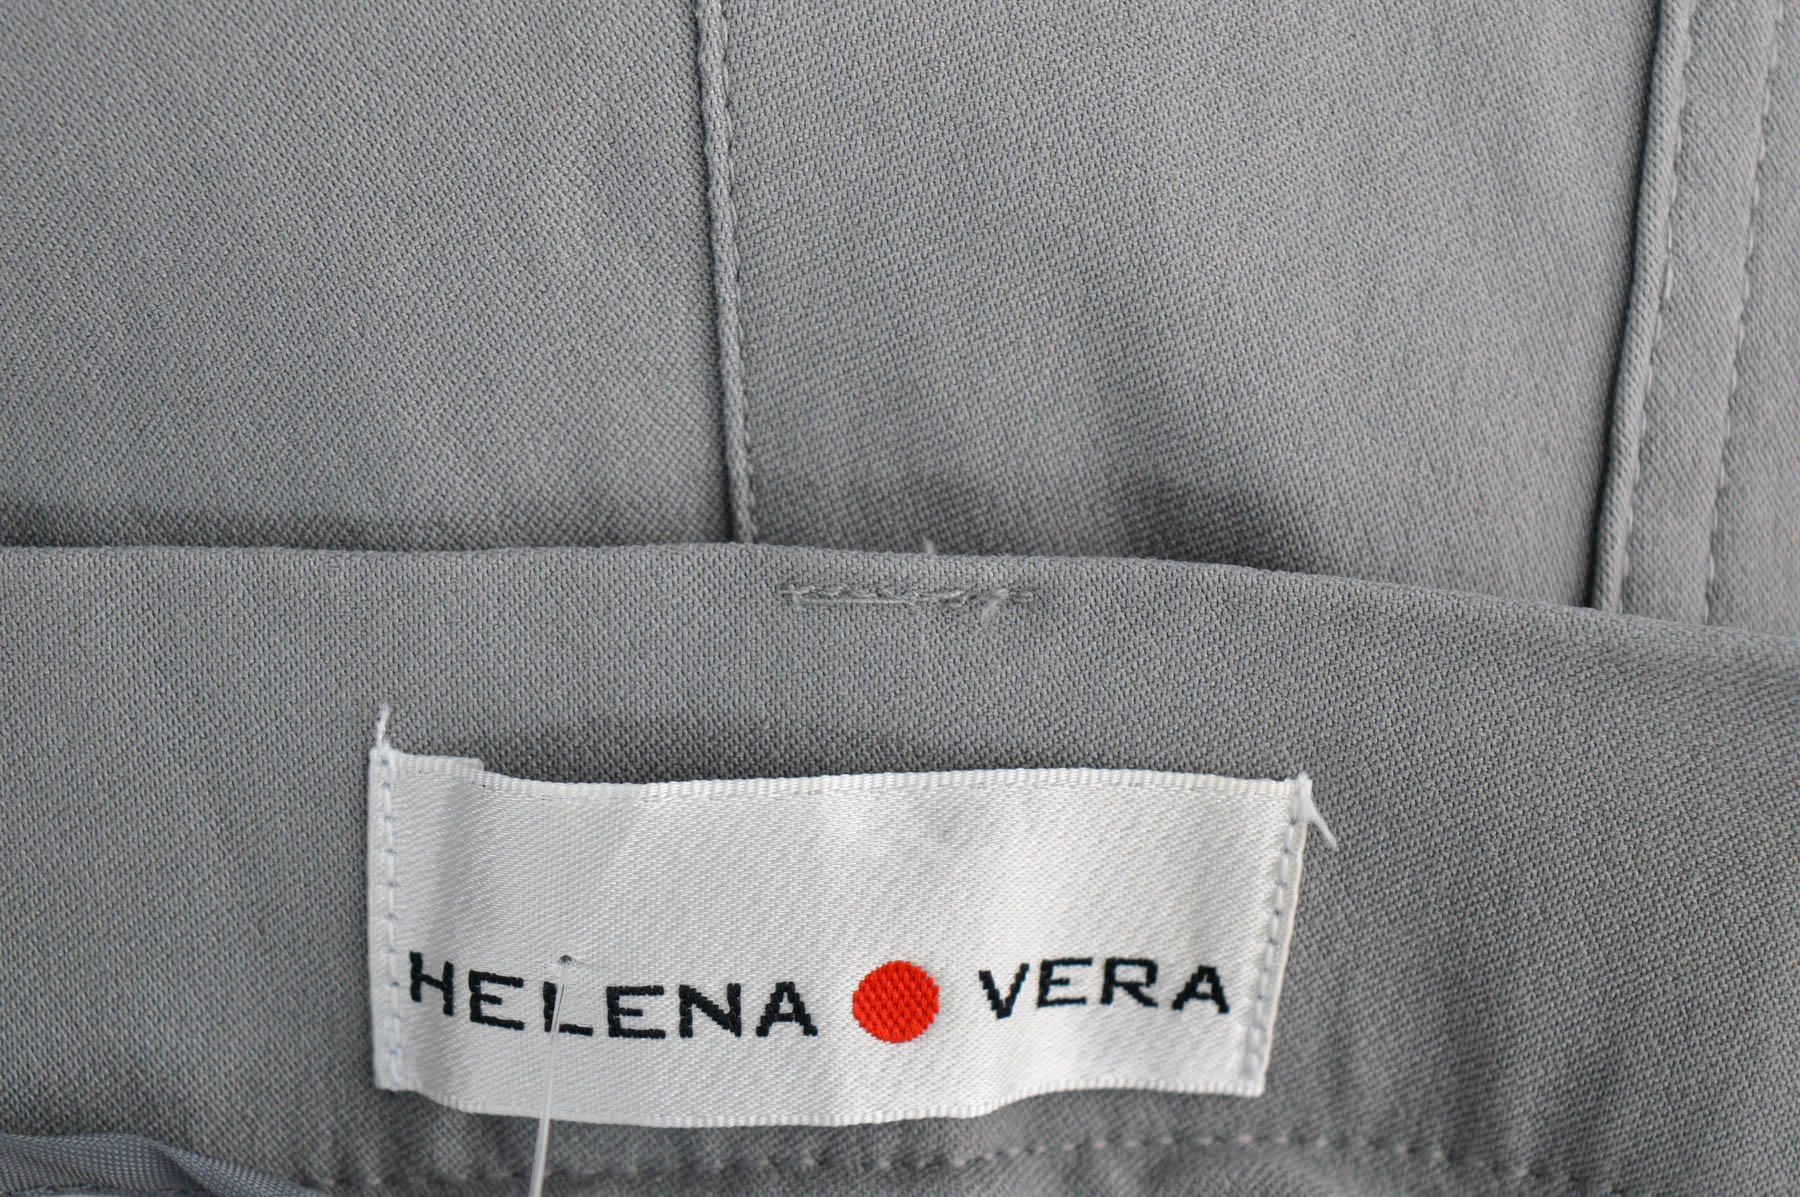 Women's trousers - Helena Vera - 2